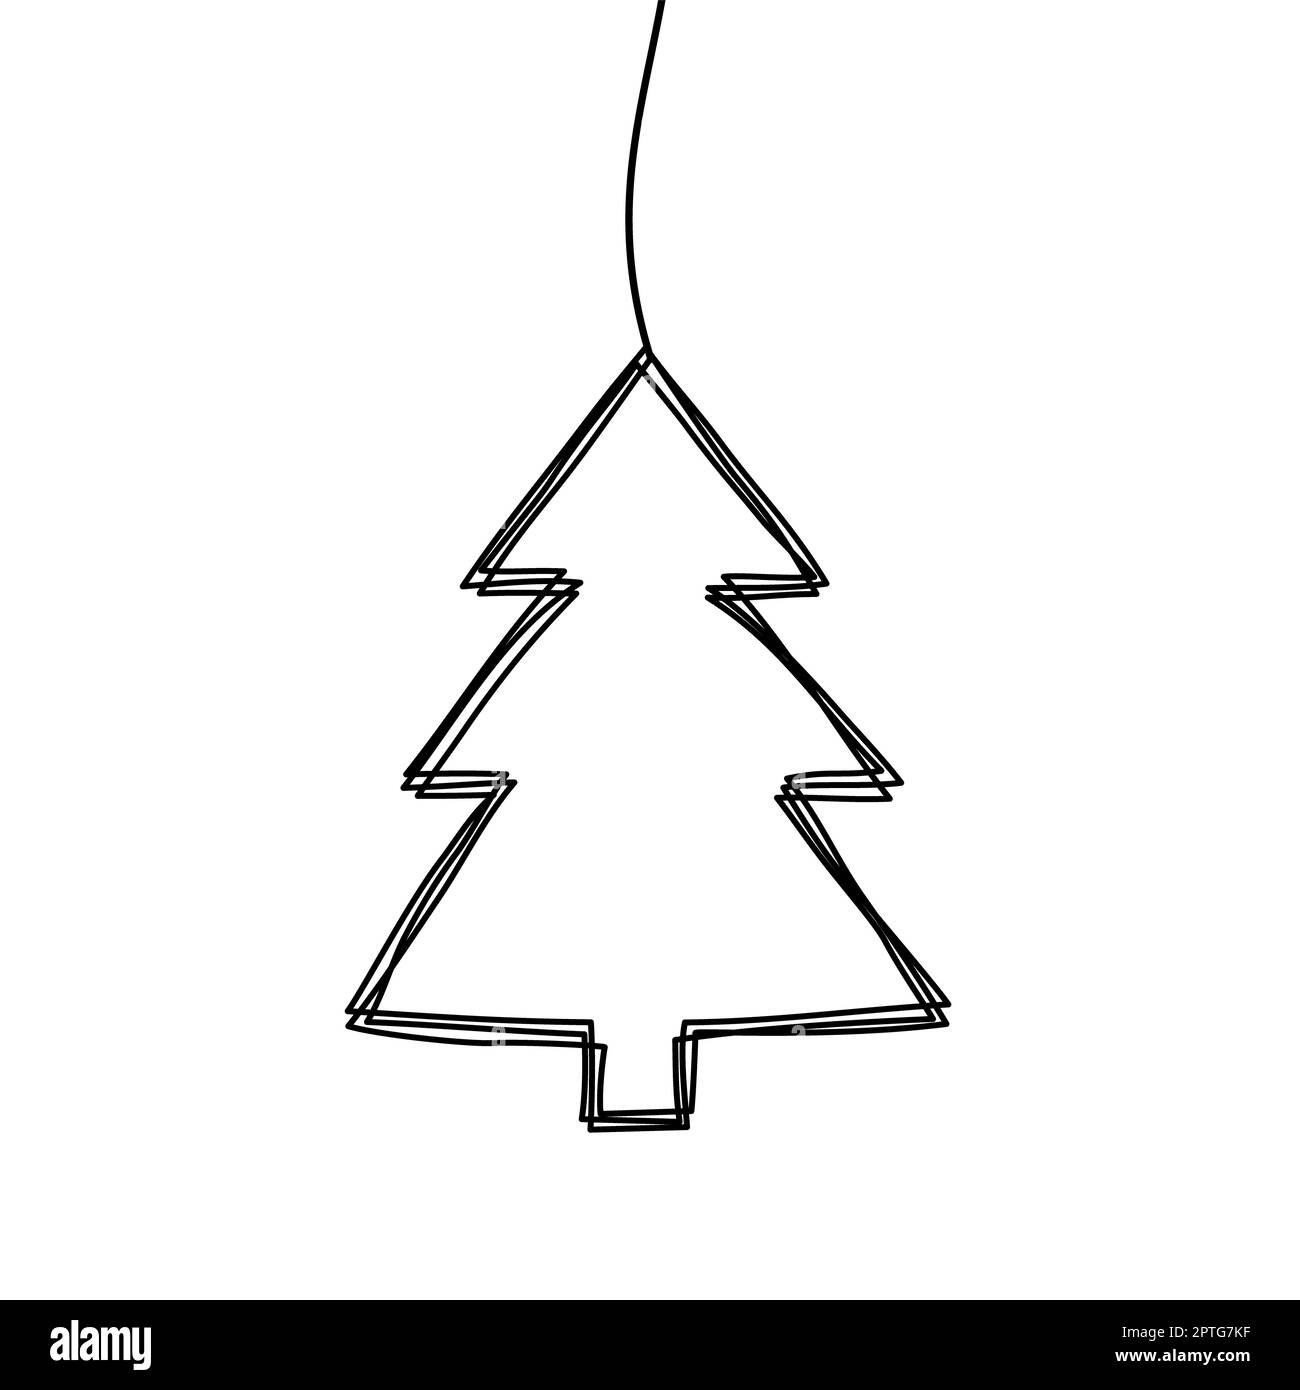 How to Draw a Christmas Tree - Easy Drawing Tutorial For Kids-saigonsouth.com.vn